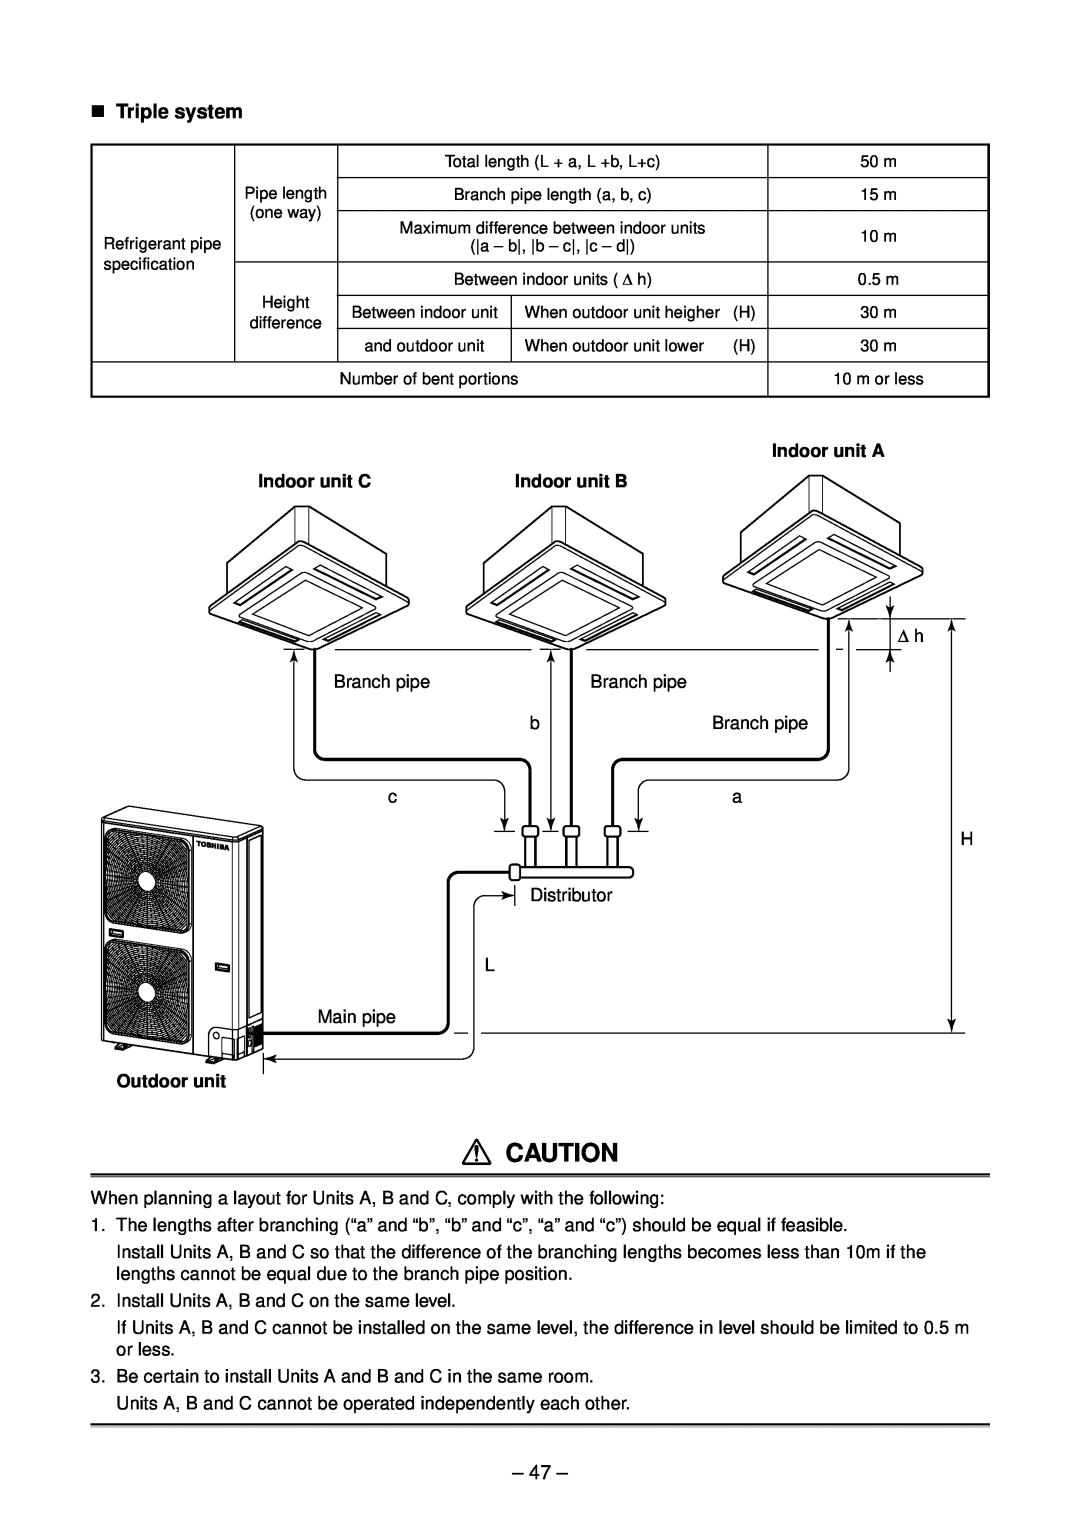 Toshiba RAV-SM1403DT-A, RAV-SM1603DT-A n Triple system, 47, Indoor unit A, Indoor unit C, Indoor unit B, Outdoor unit 